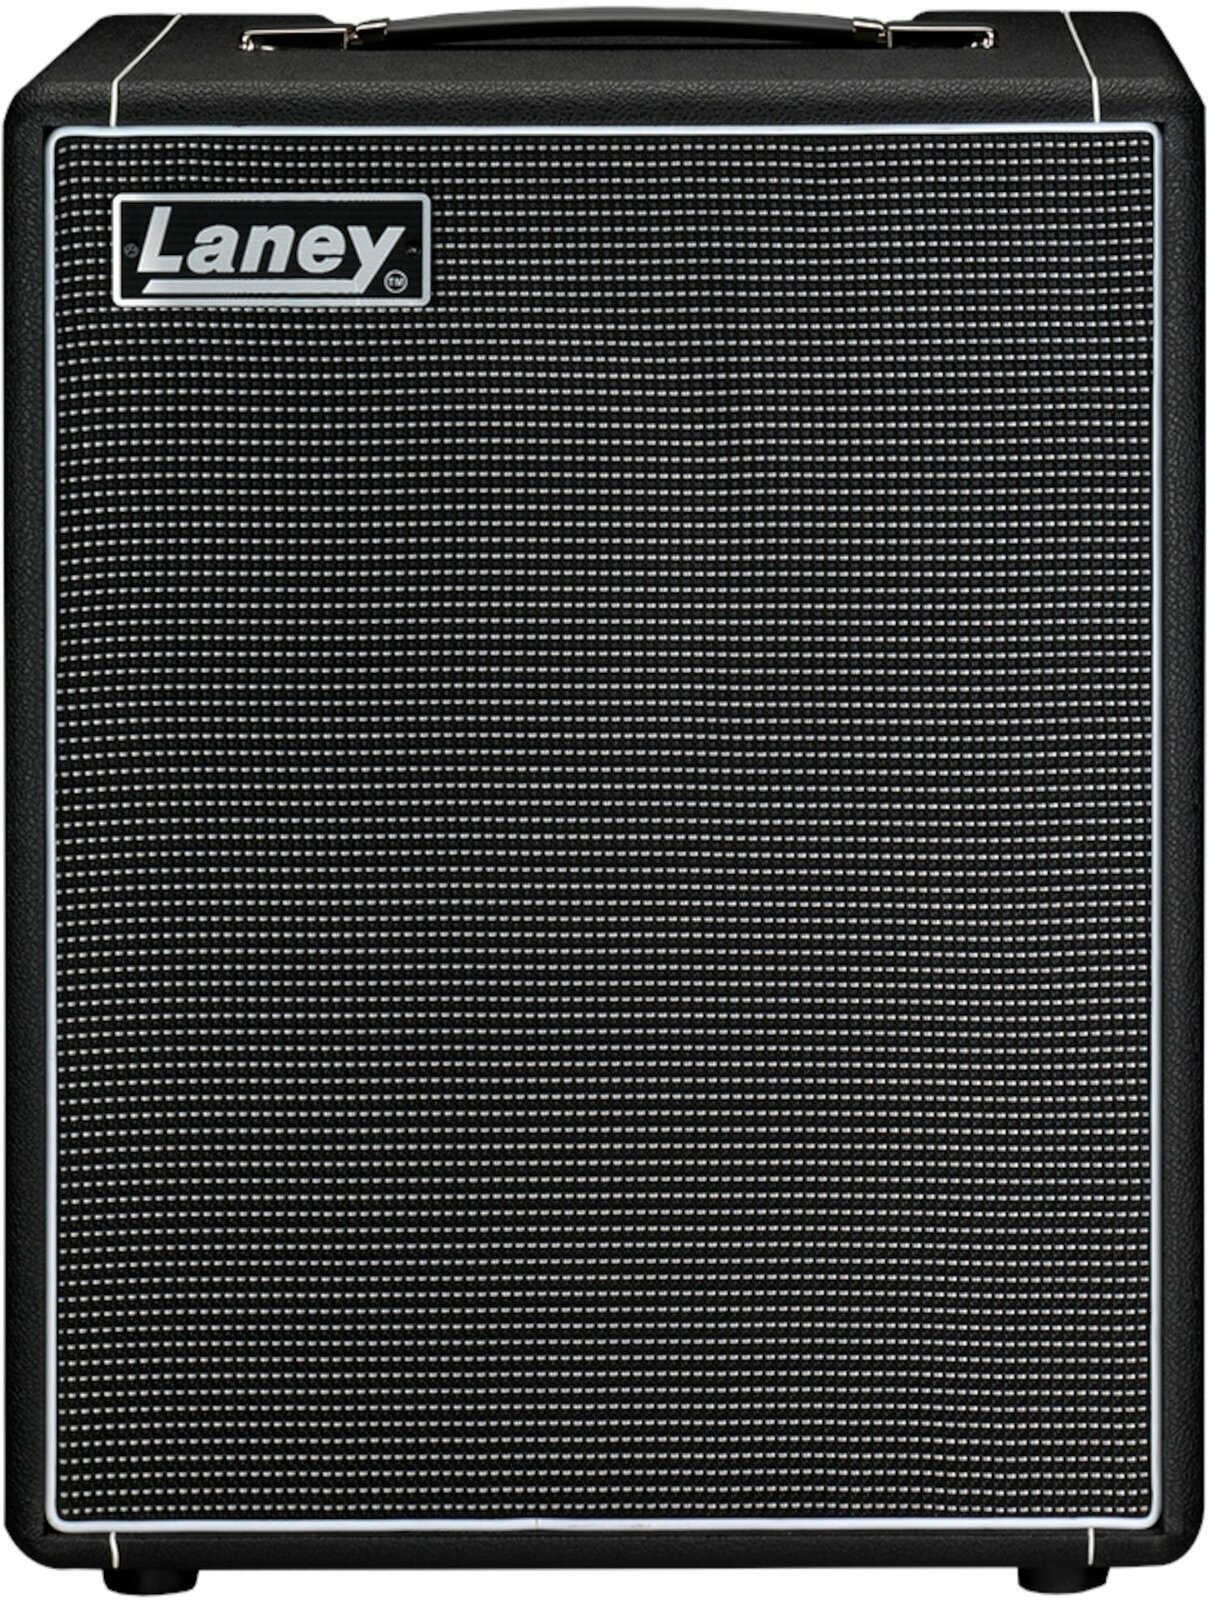 Combo basse Laney Digbeth DB200-210